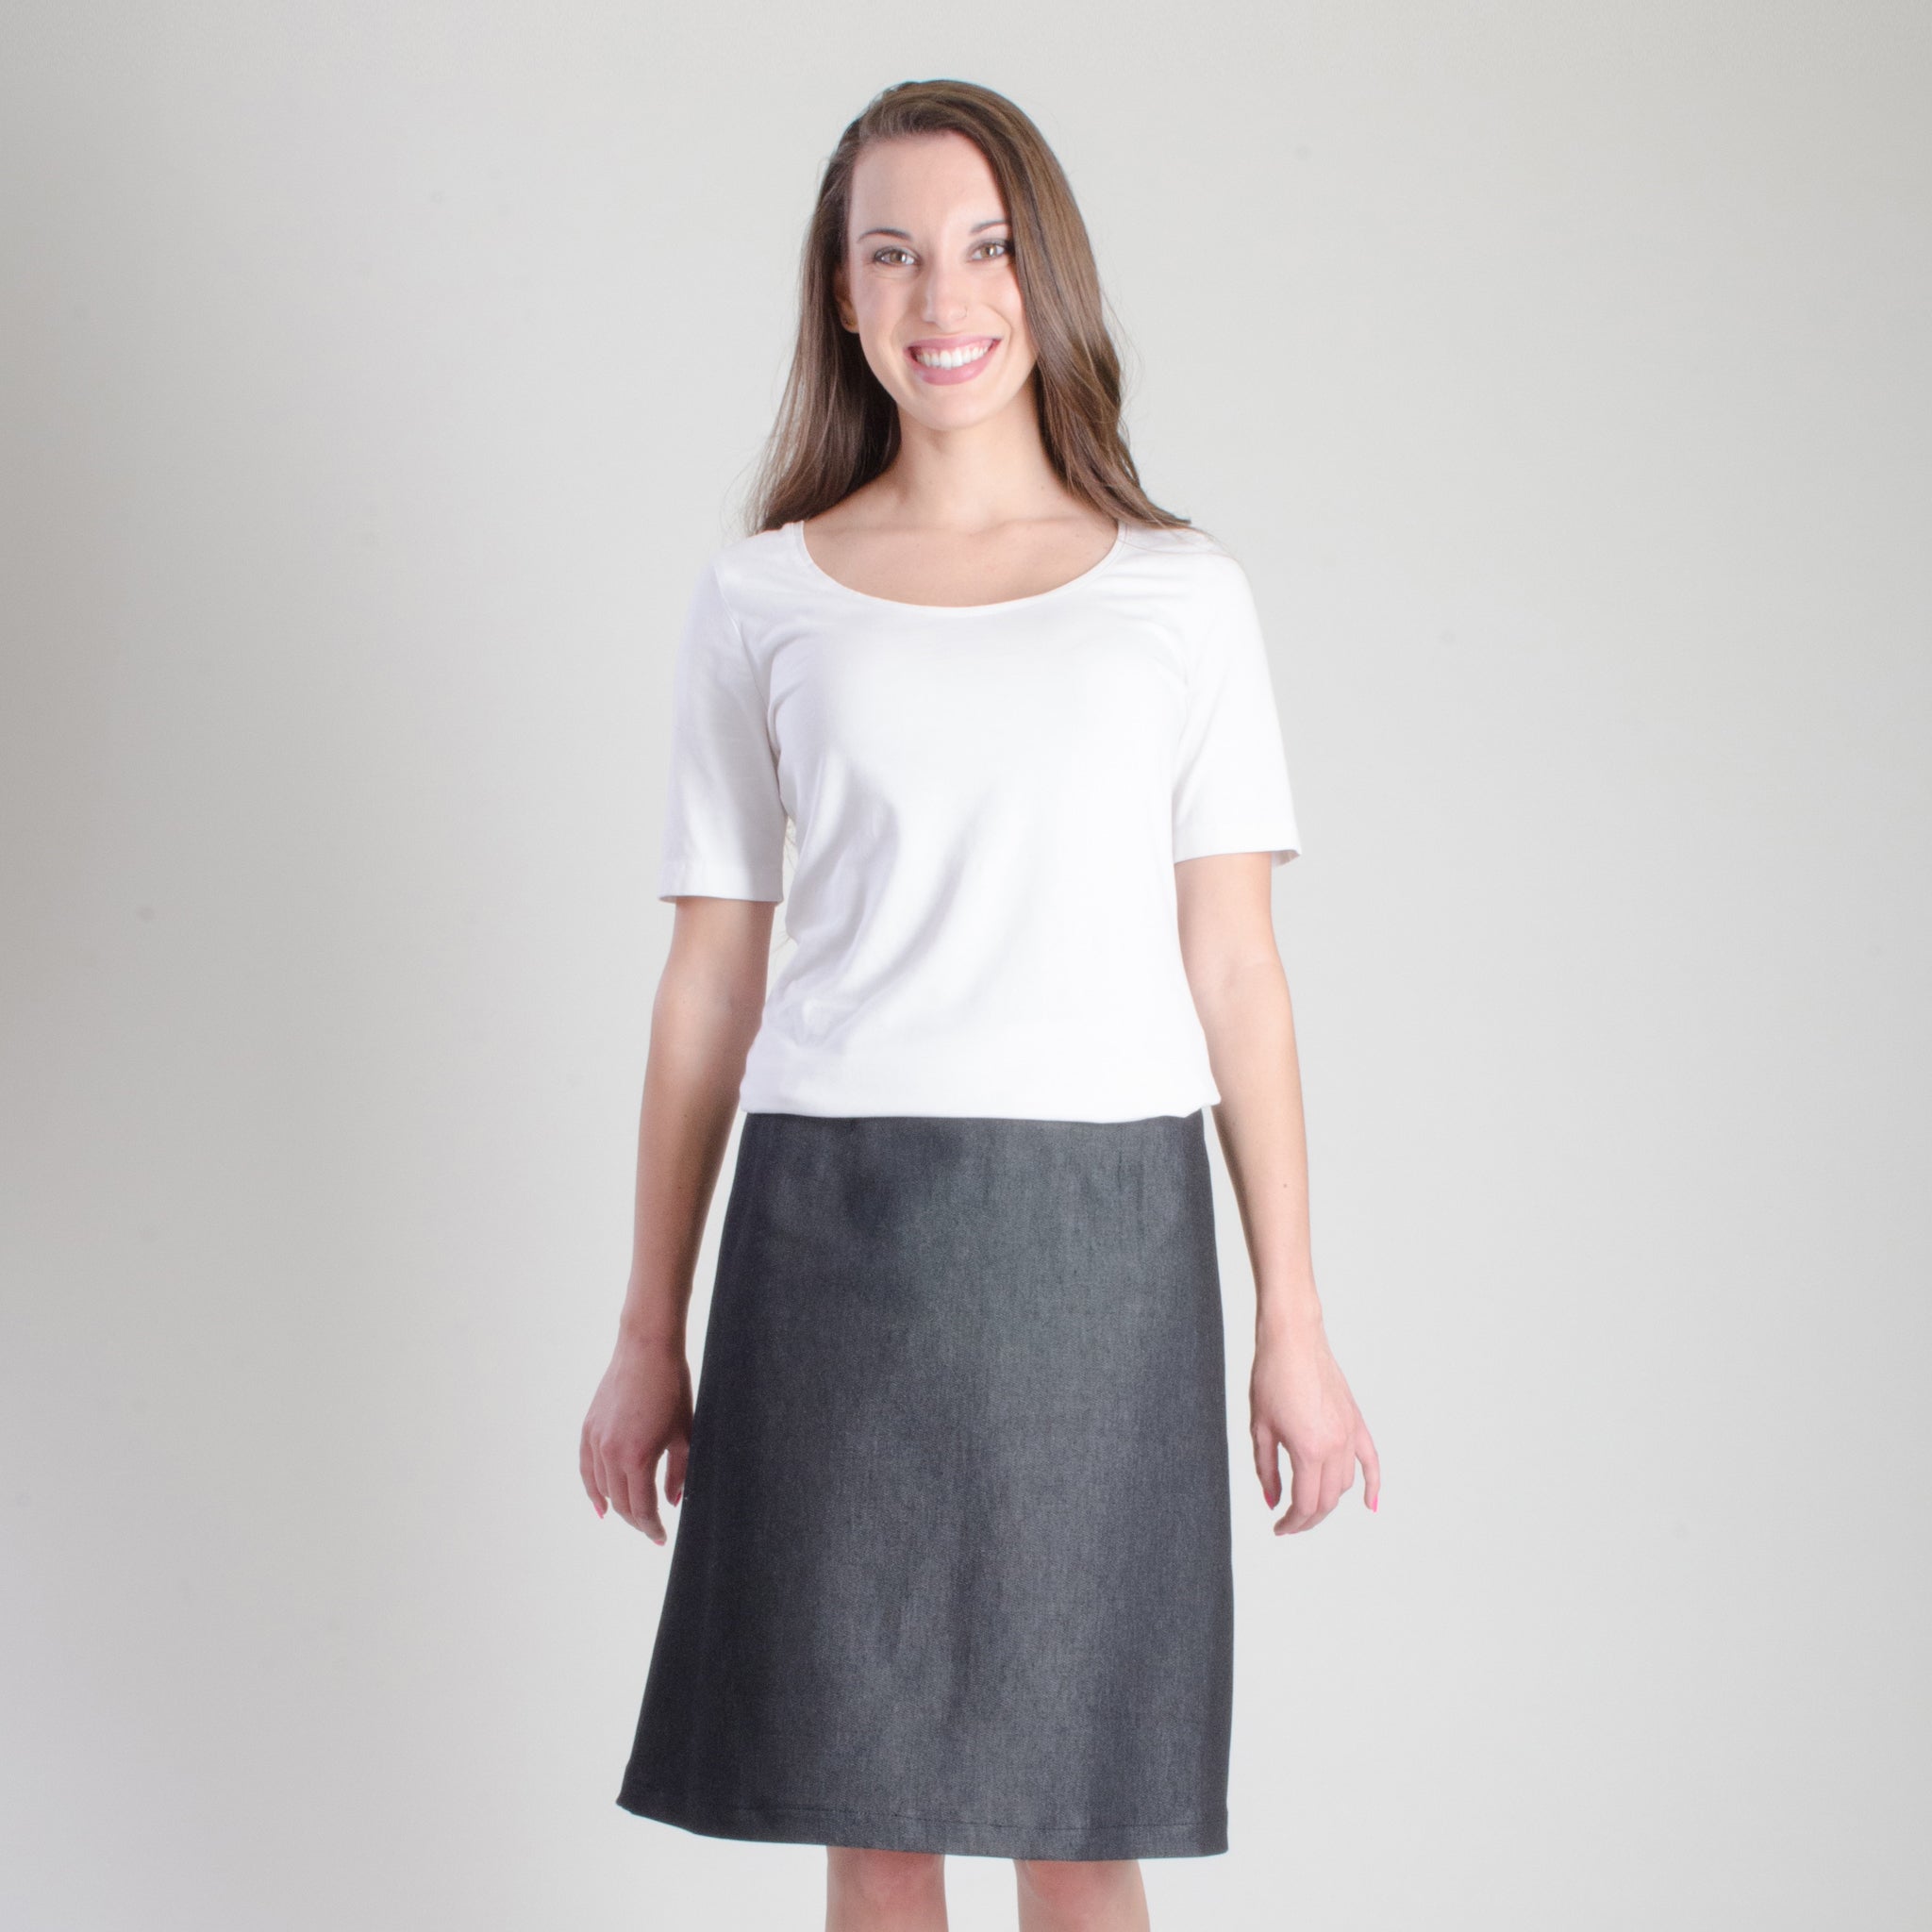 PFI Pattern #1511 A-Line Skirt